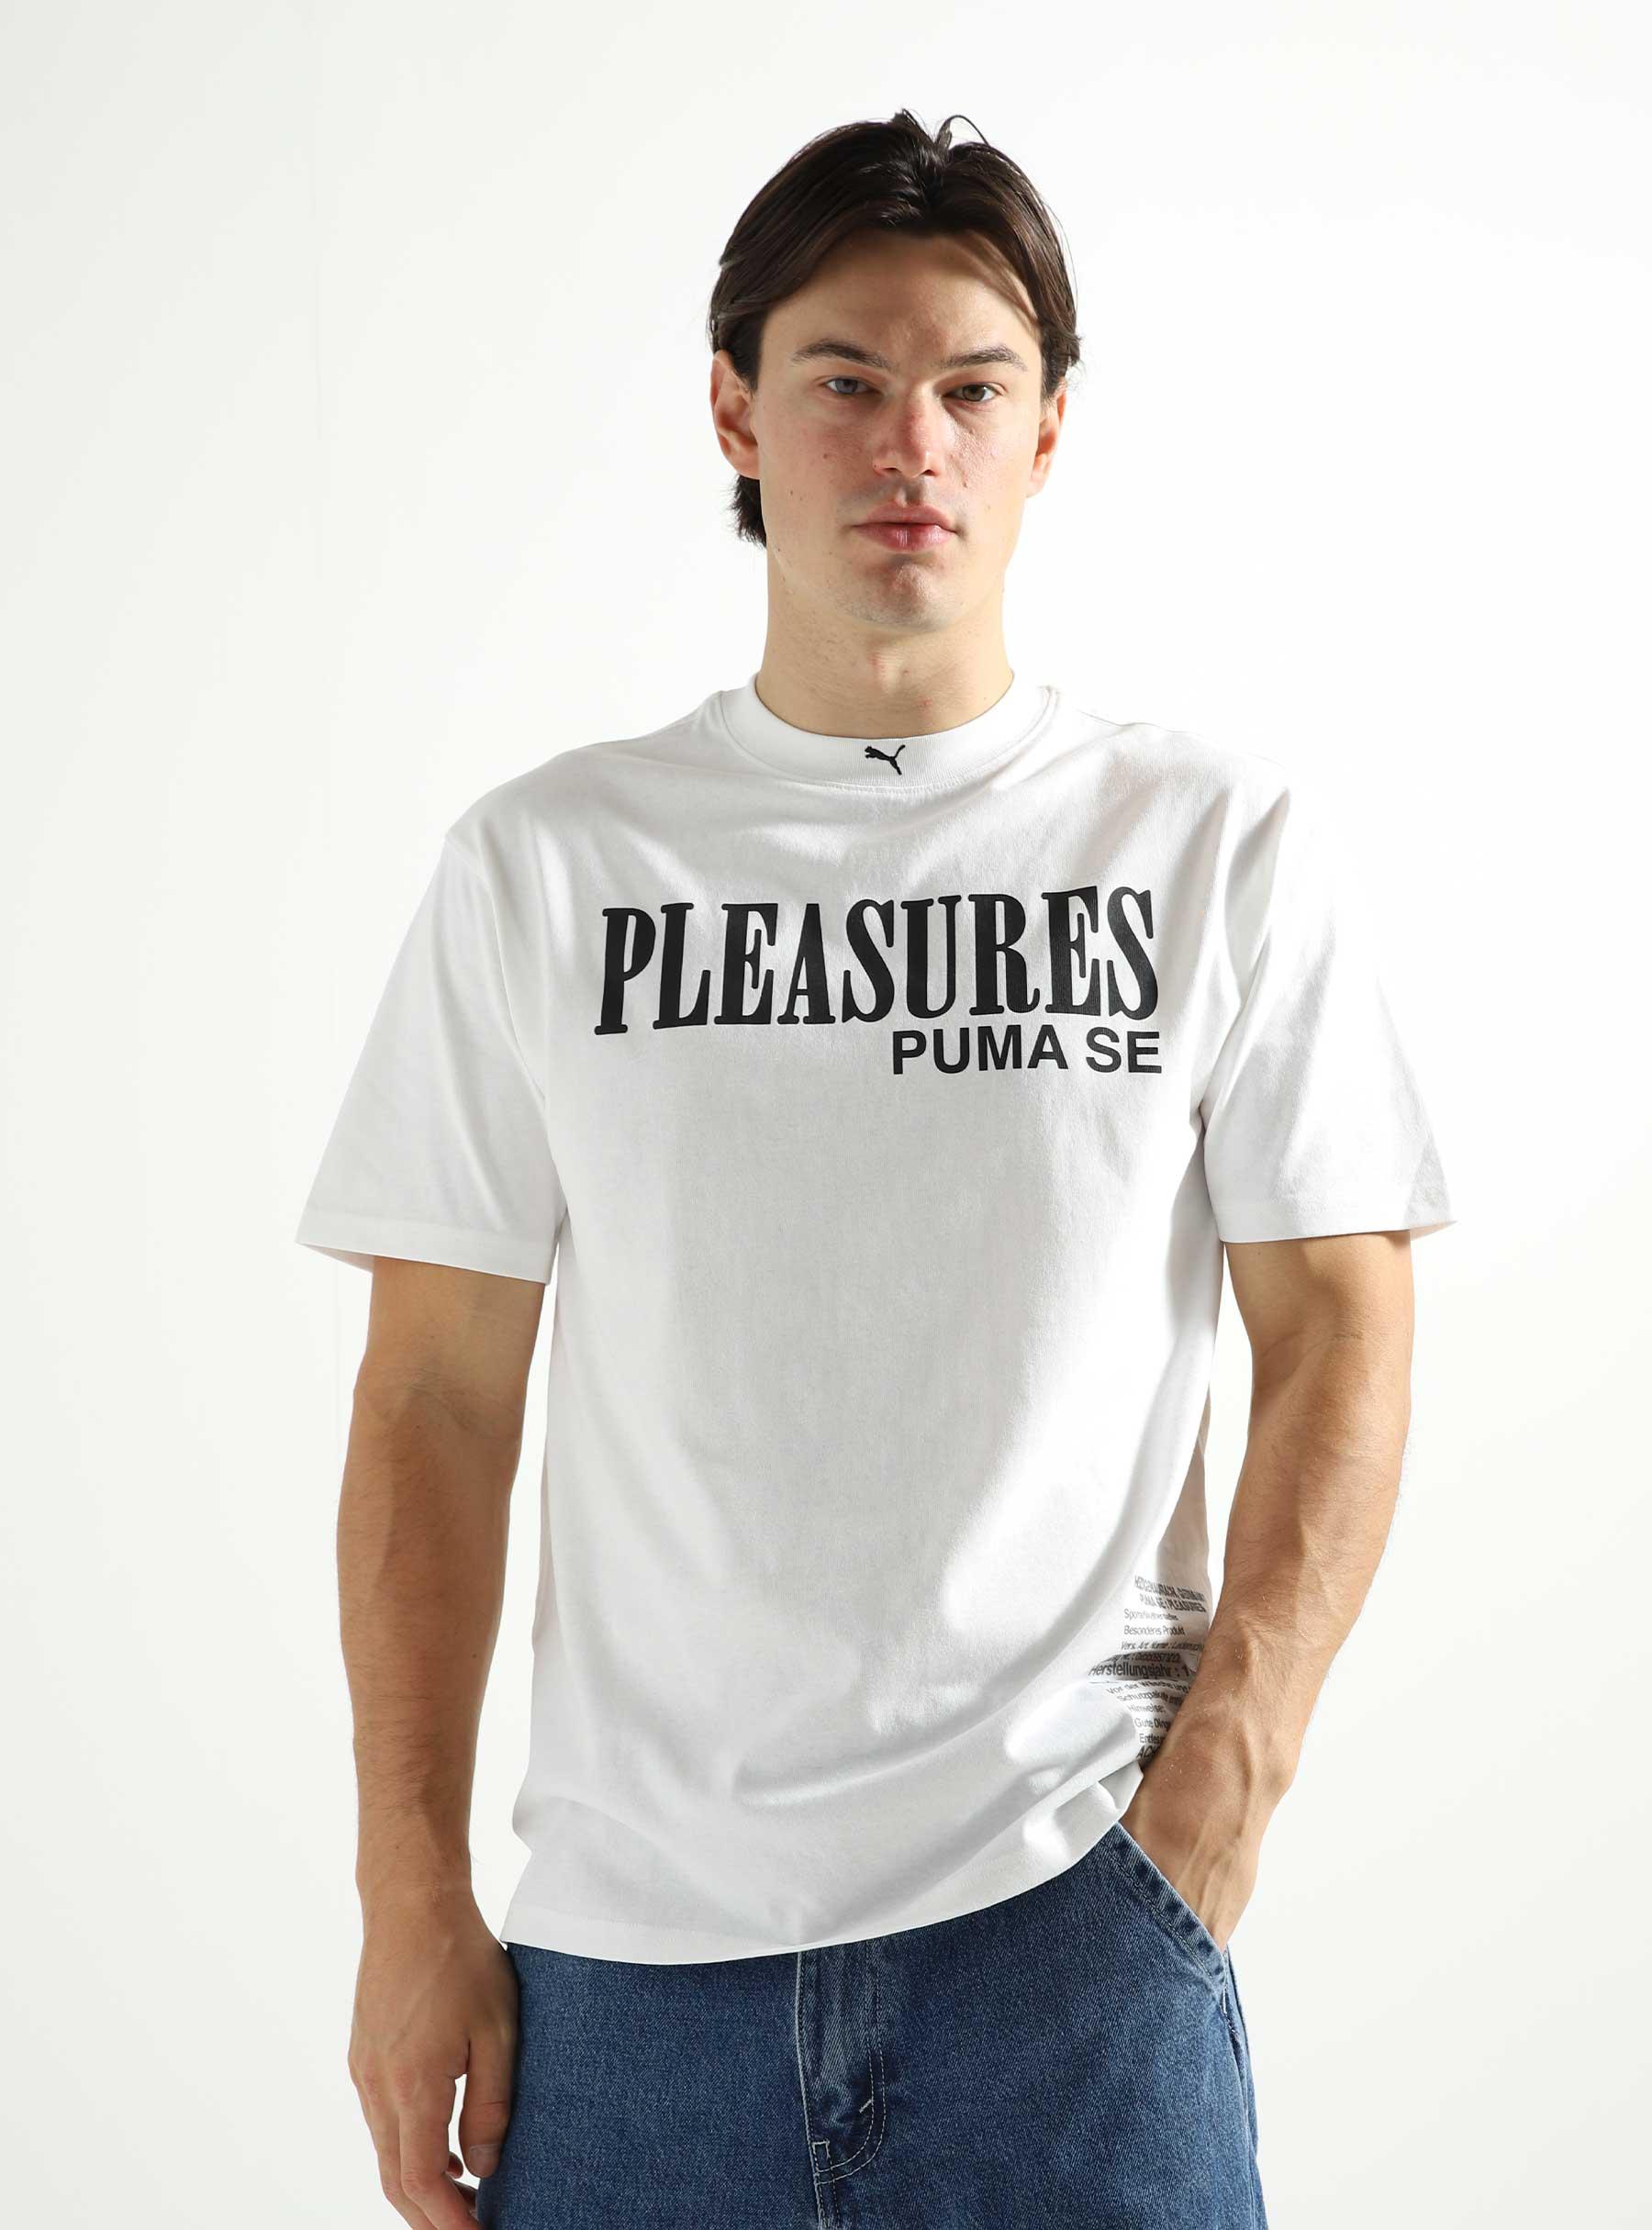 Puma x Pleasures Typo T-shirt White 620878-02